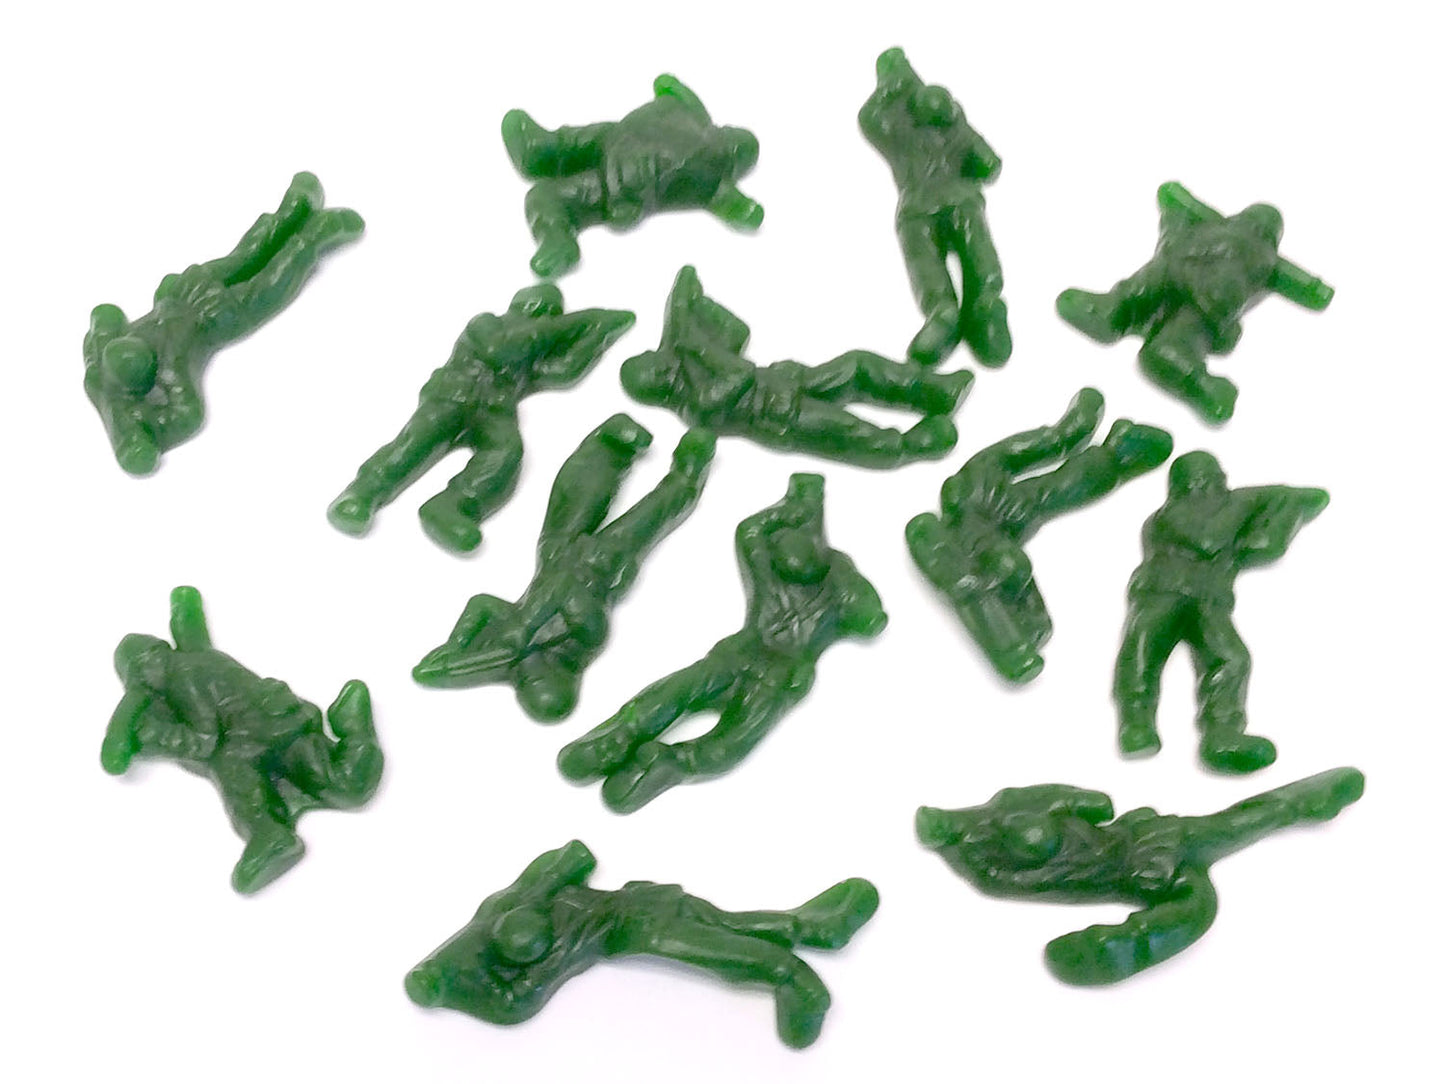 Gummi Green Army Soldiers - bulk 2 lb bag